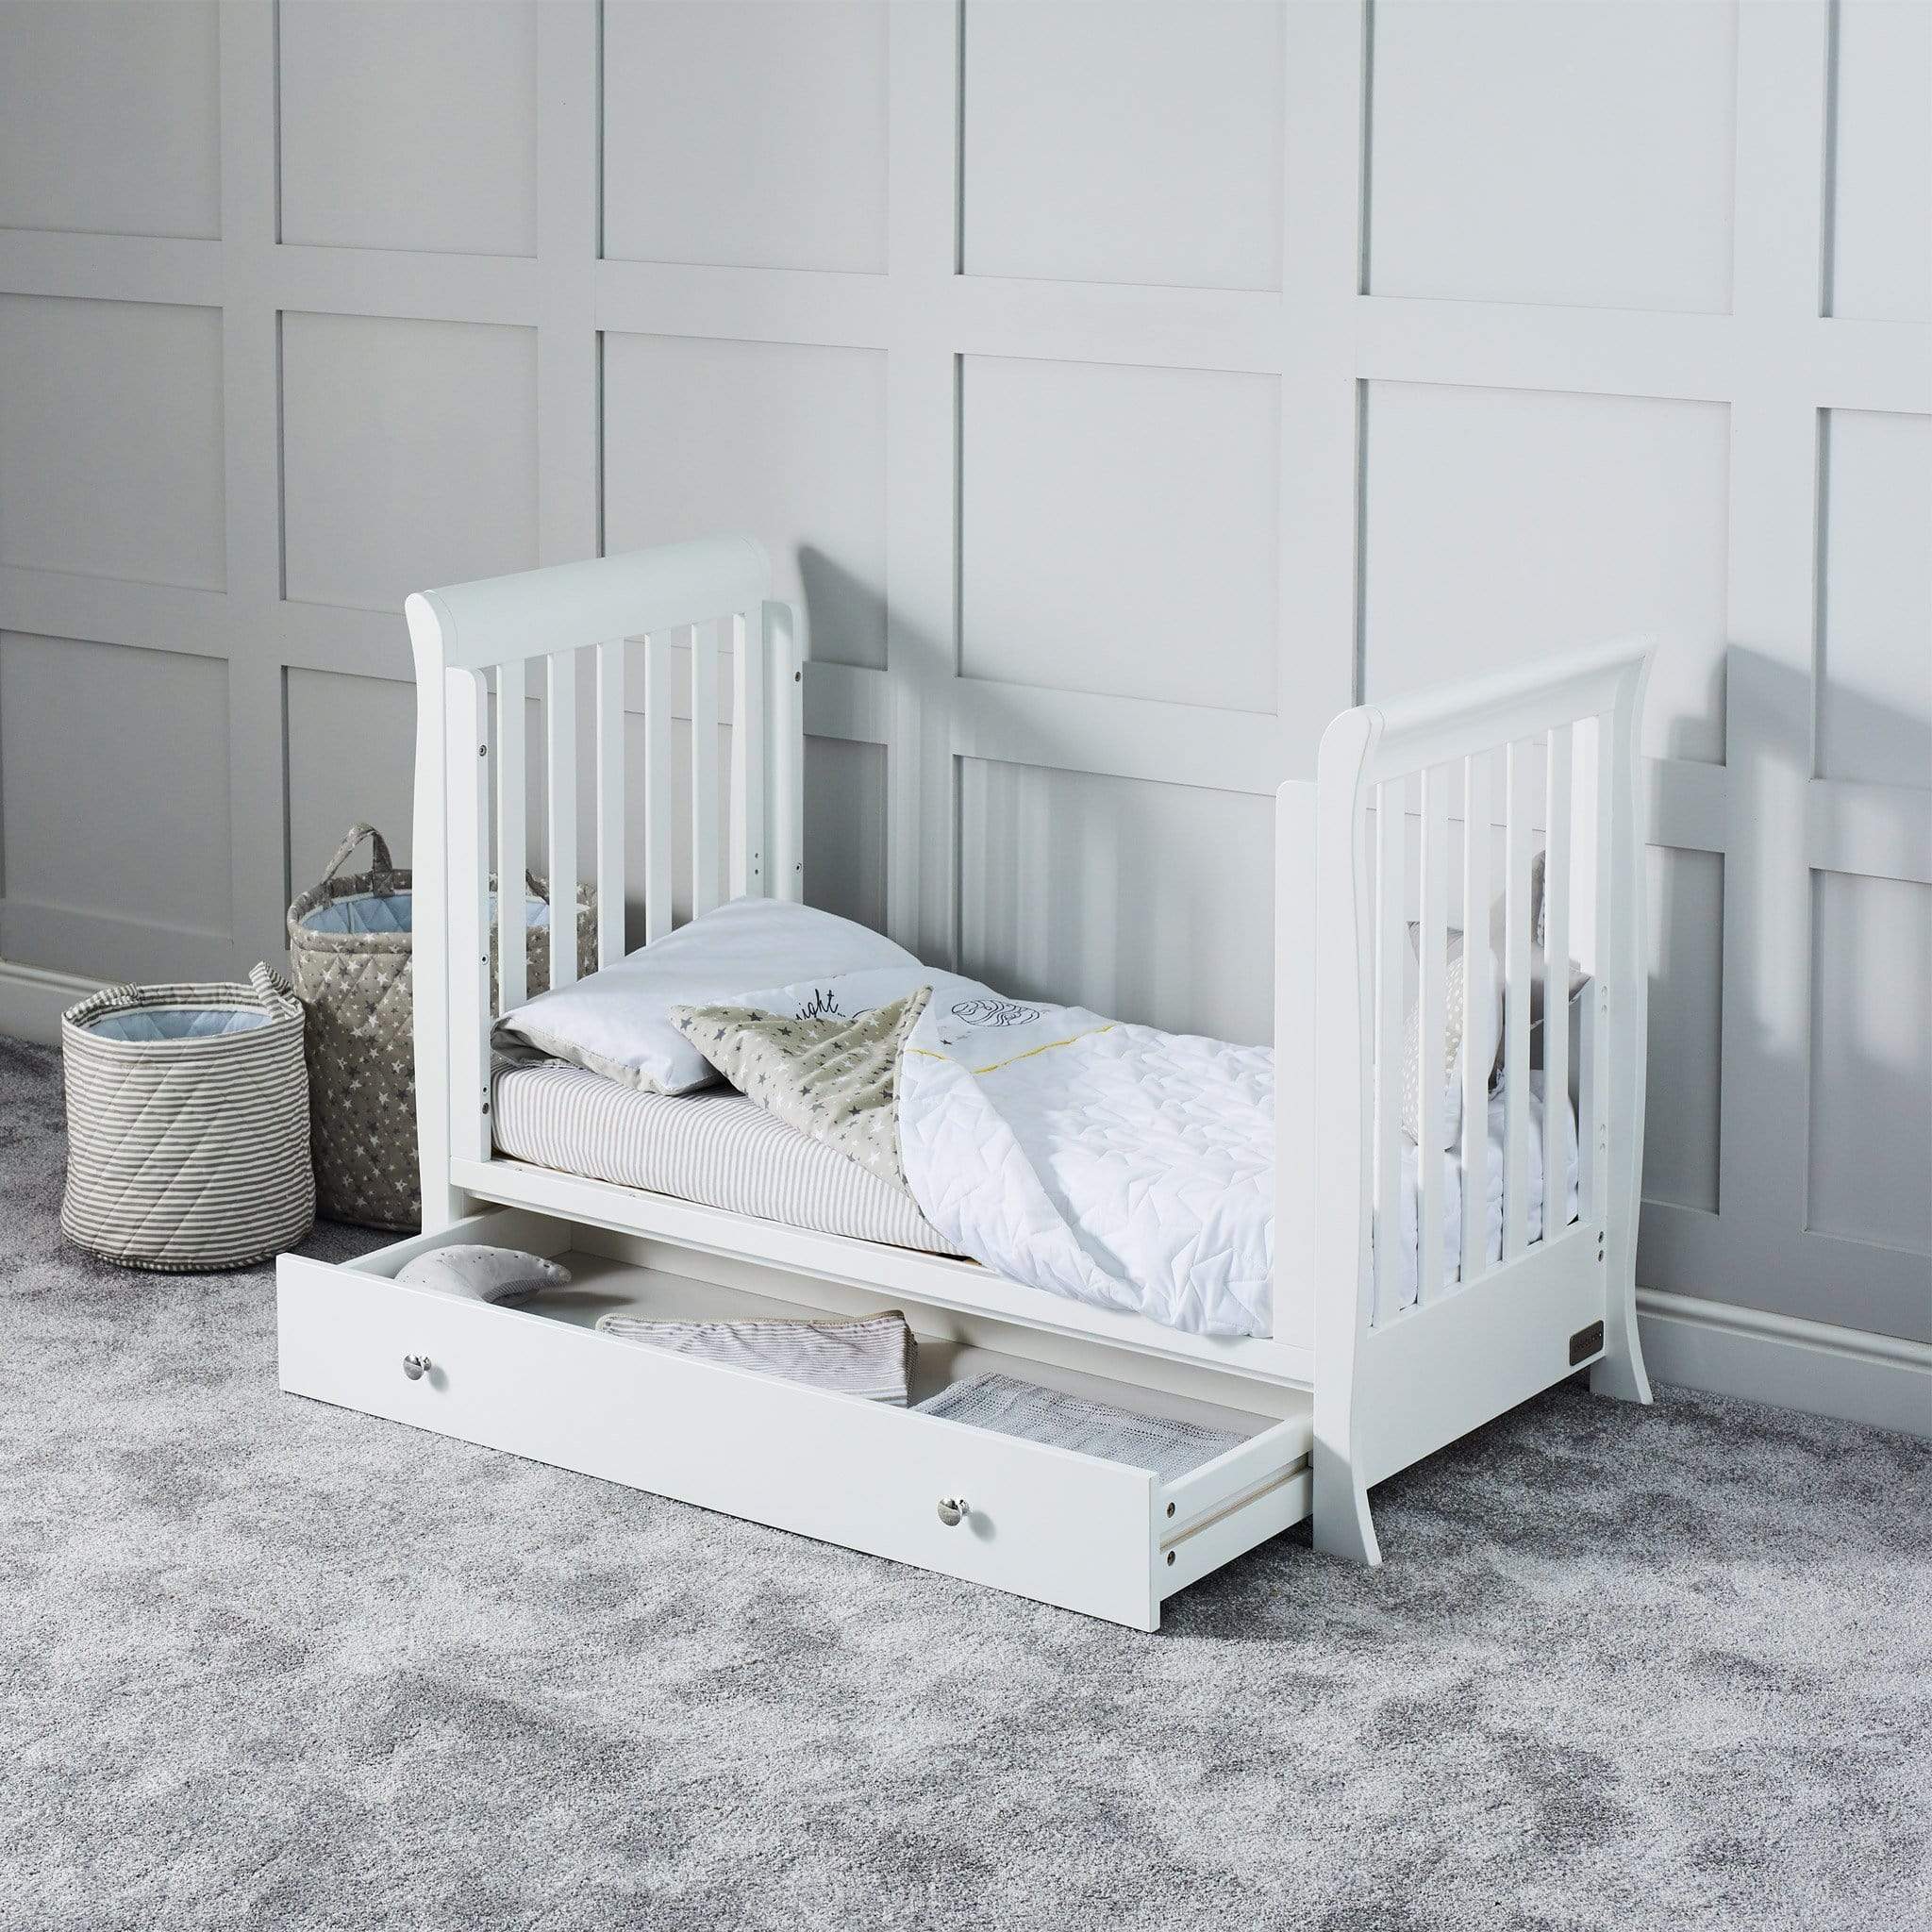 Ickle Bubba Snowdon 4 in 1 Mini 2 Piece Furniture Set - White Nursery Room Sets